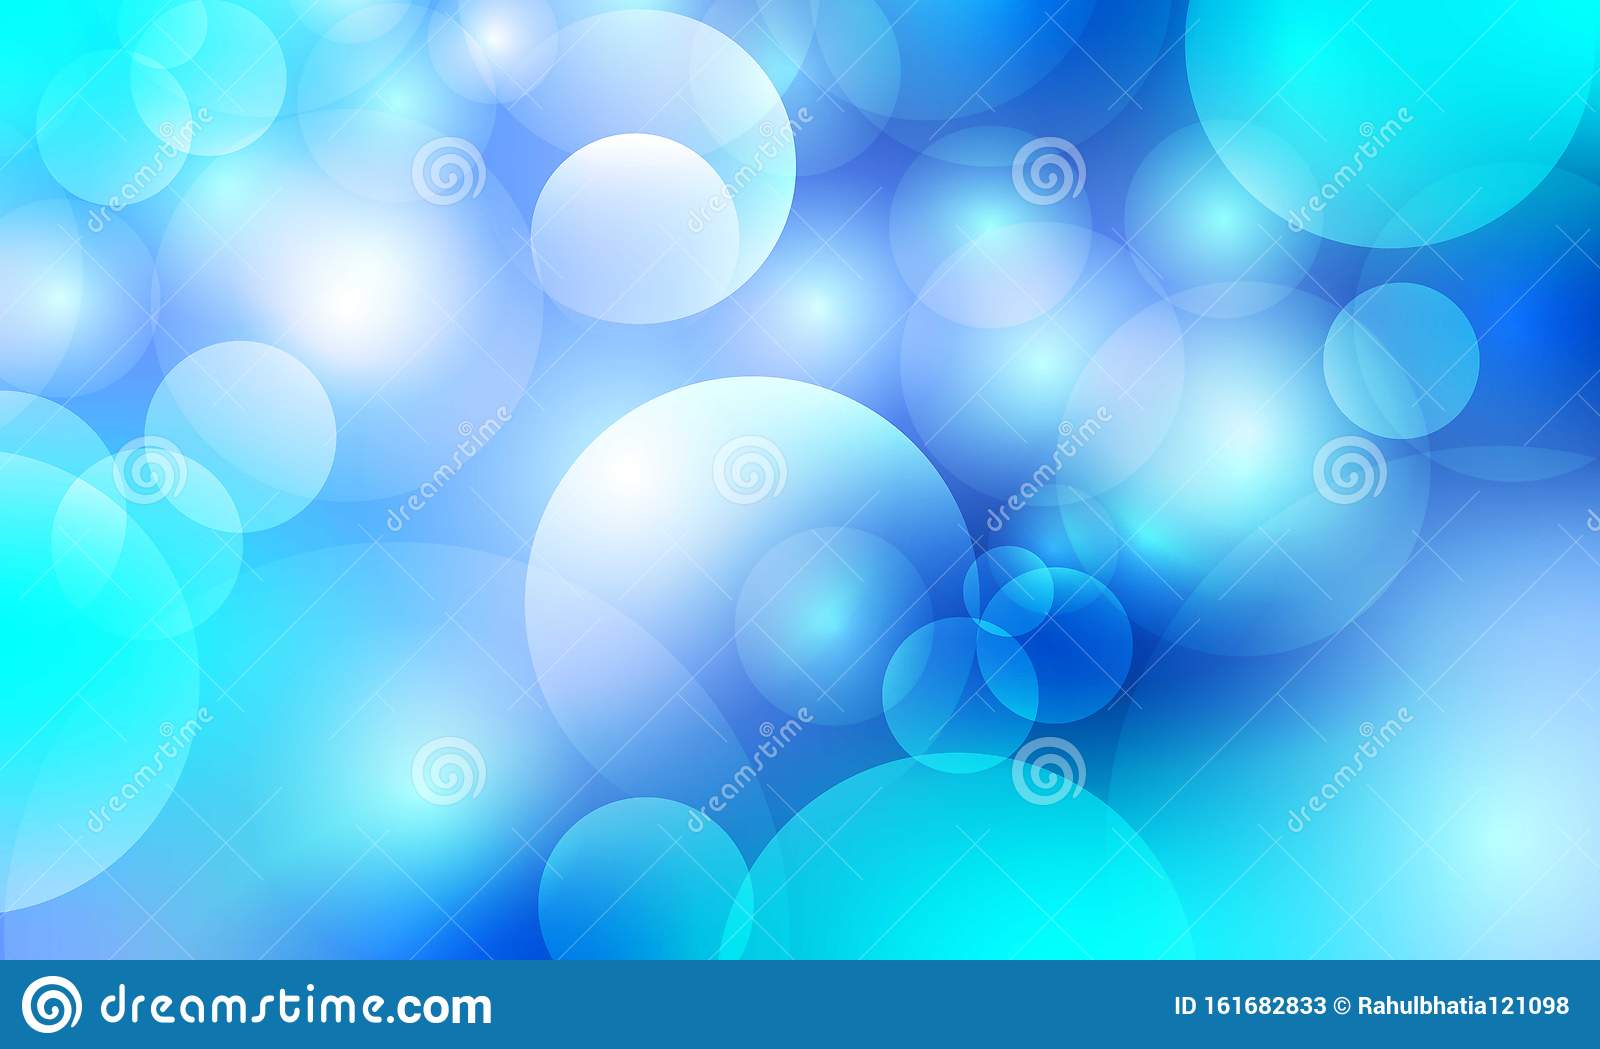 Abstract sky blue blur background design stock illustration